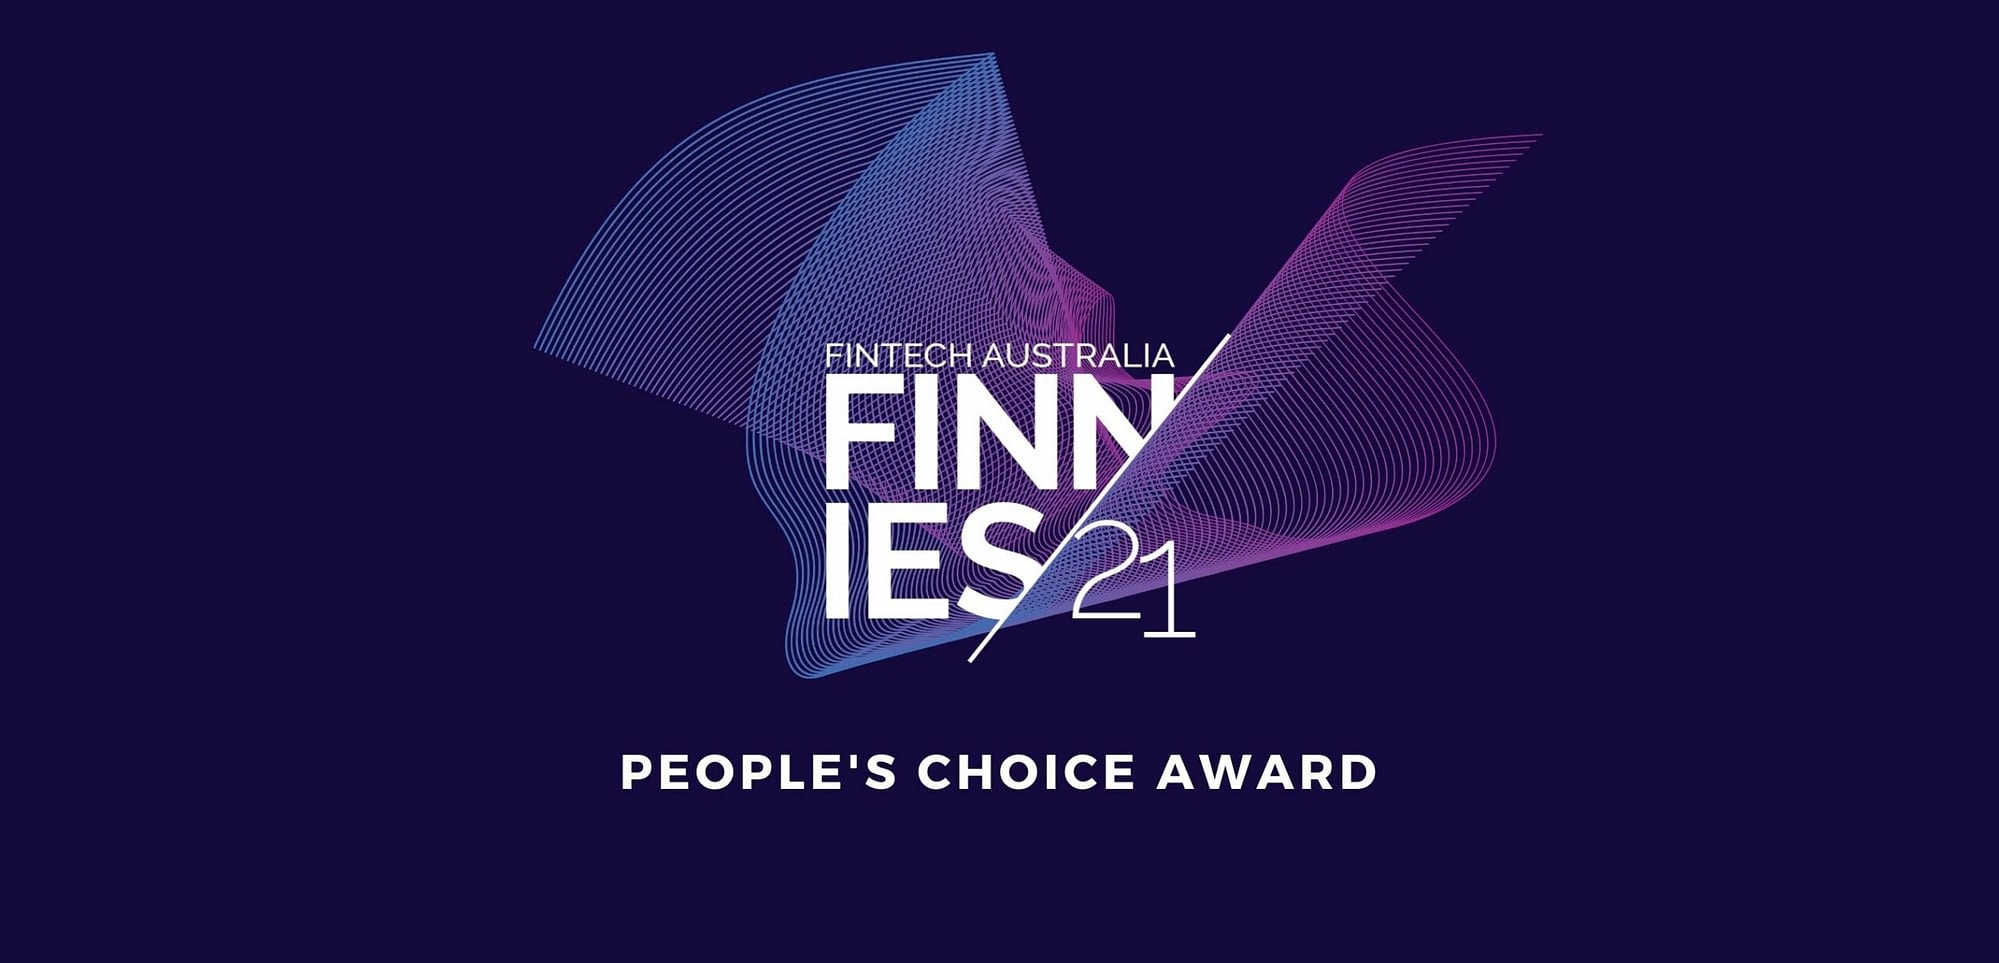 Finnies 2021 People's Choice Awards